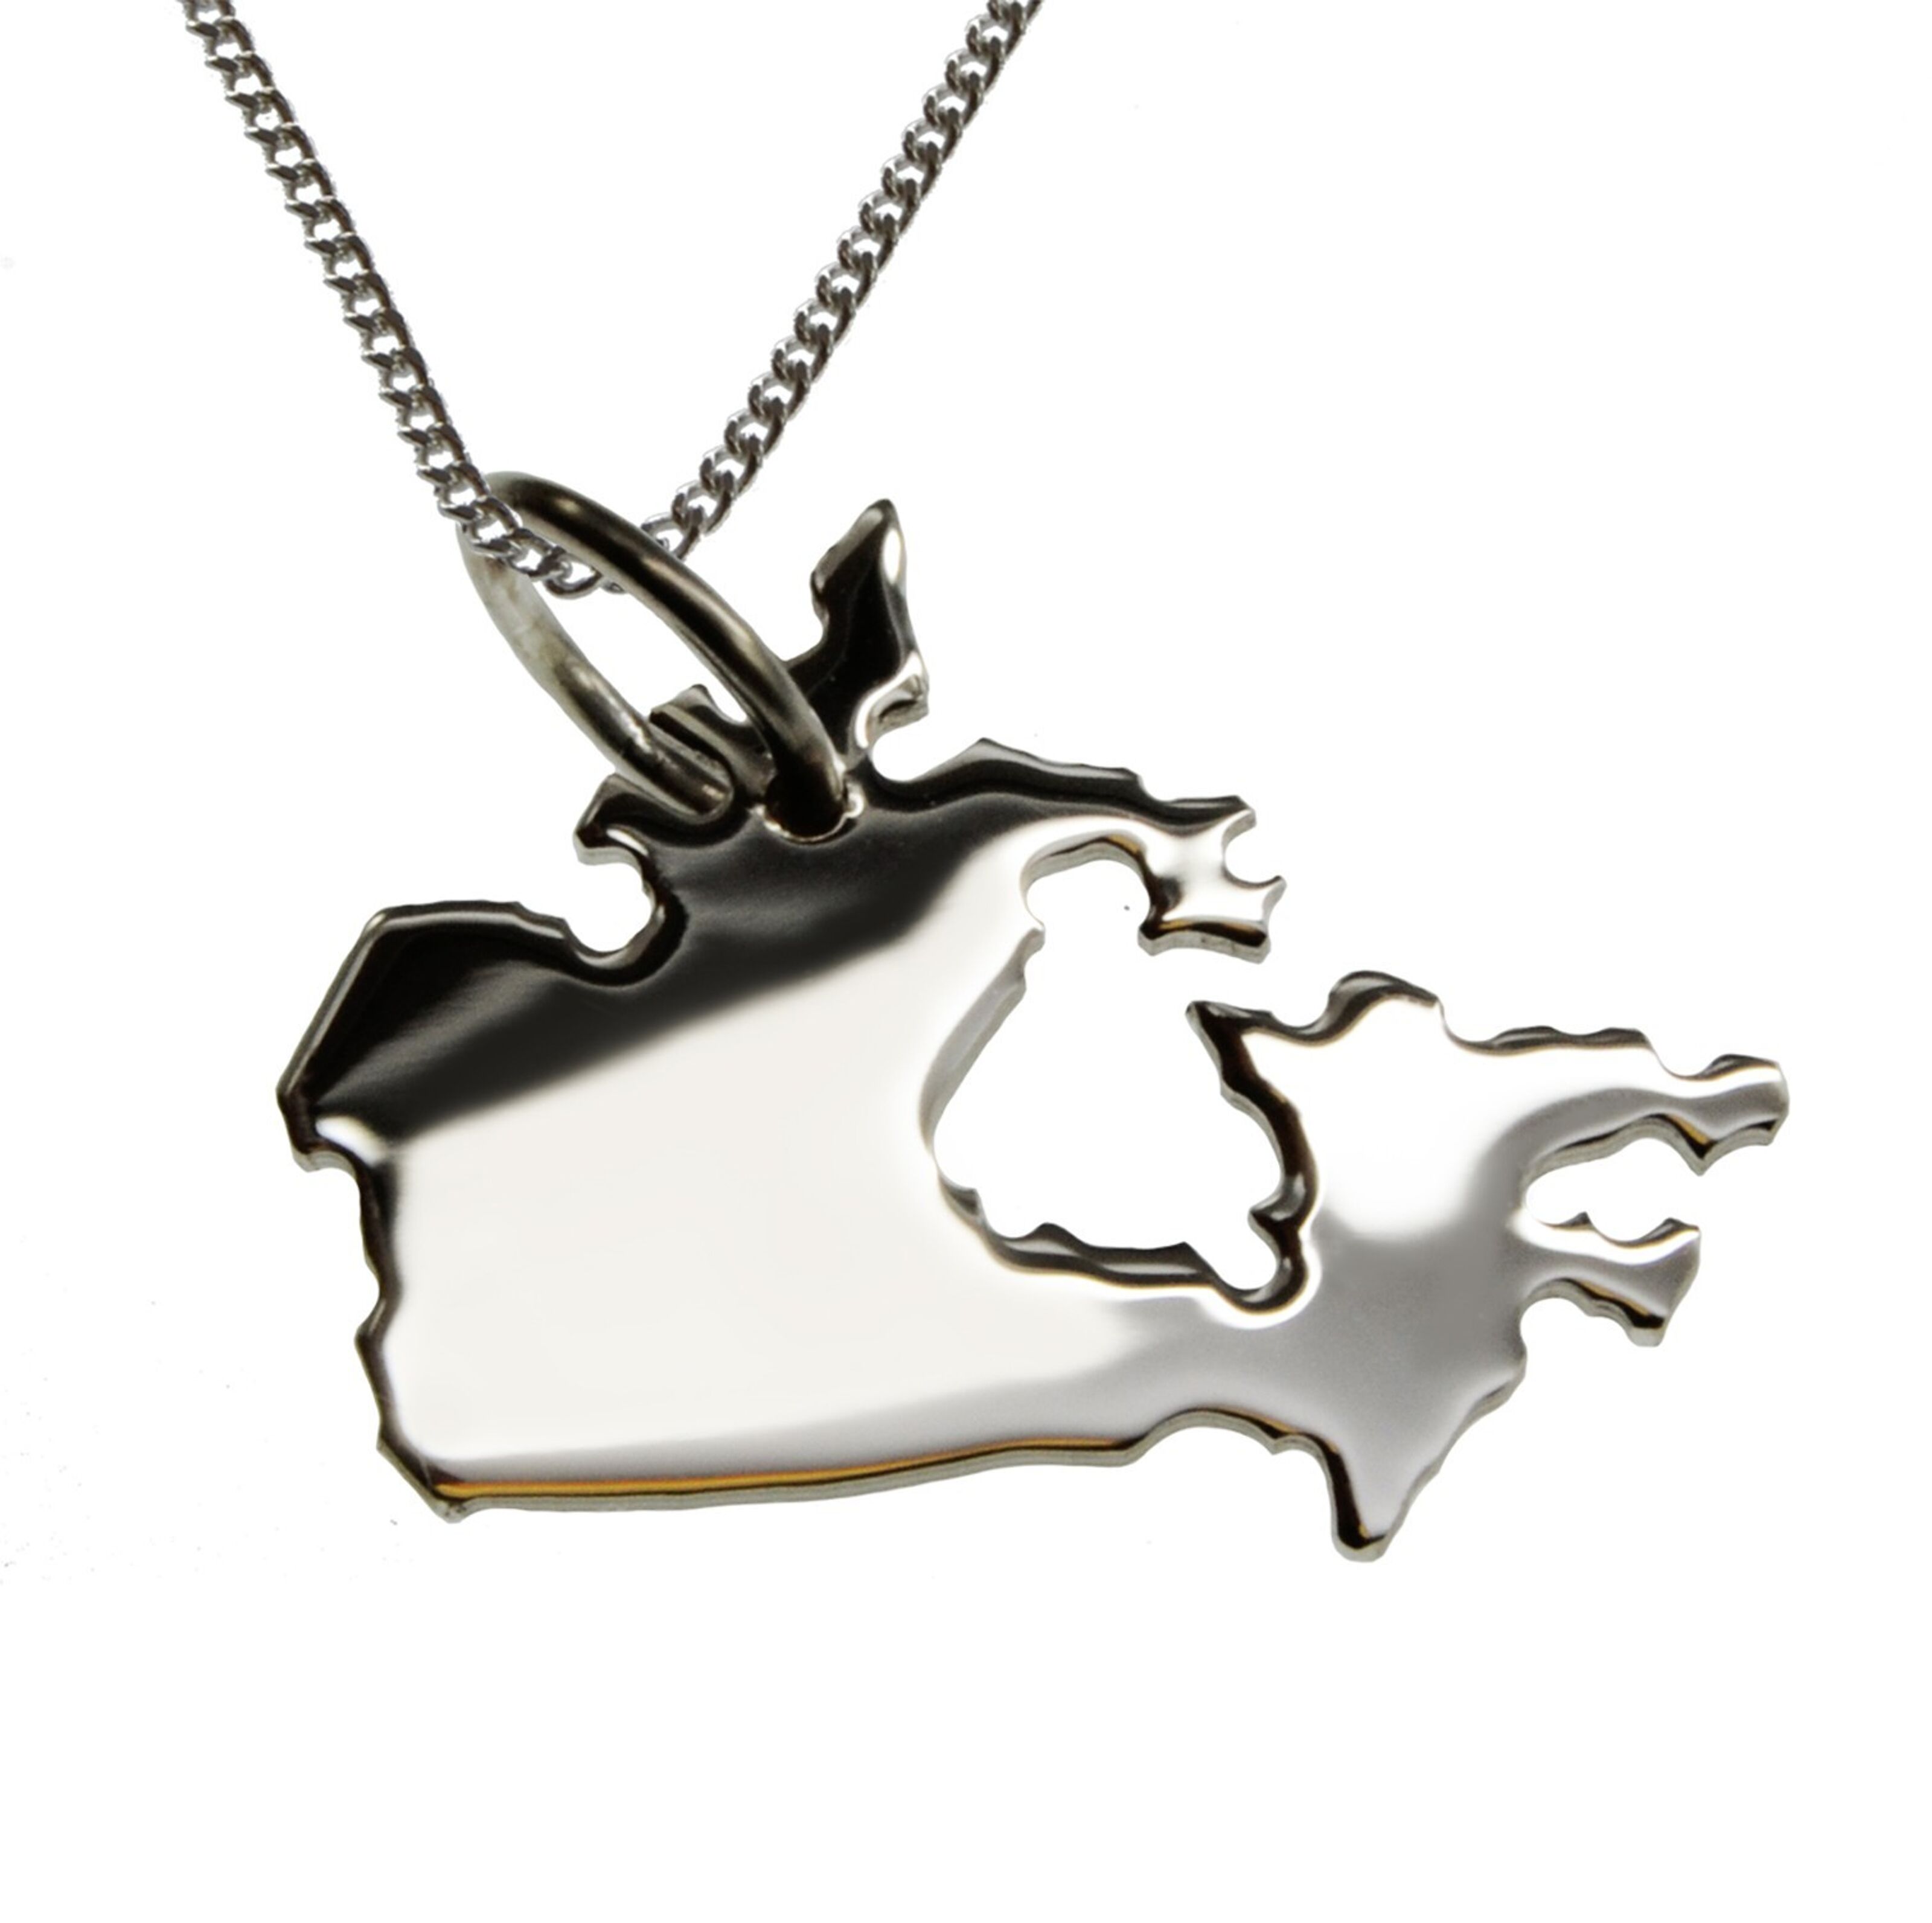 Buy wholesale 50cm necklace + pendant 925 in Canada solid silver